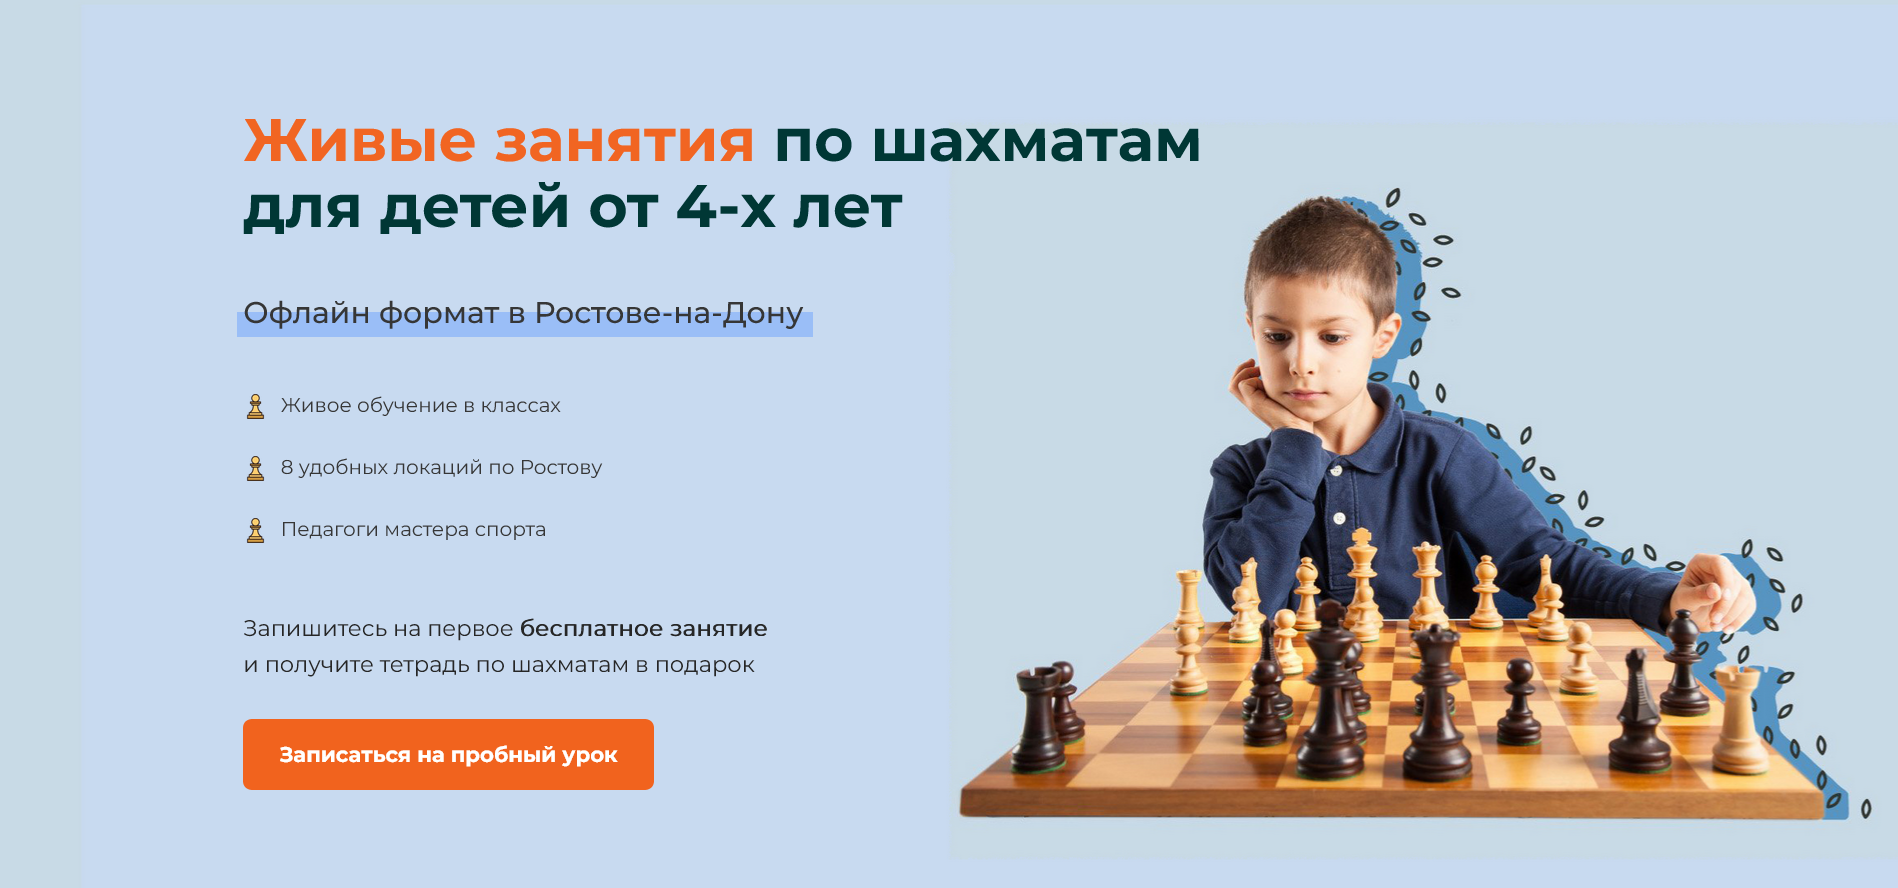 Преподаватель по шахматам. Реклама шахматного клуба для детей. Шахматы максимум.